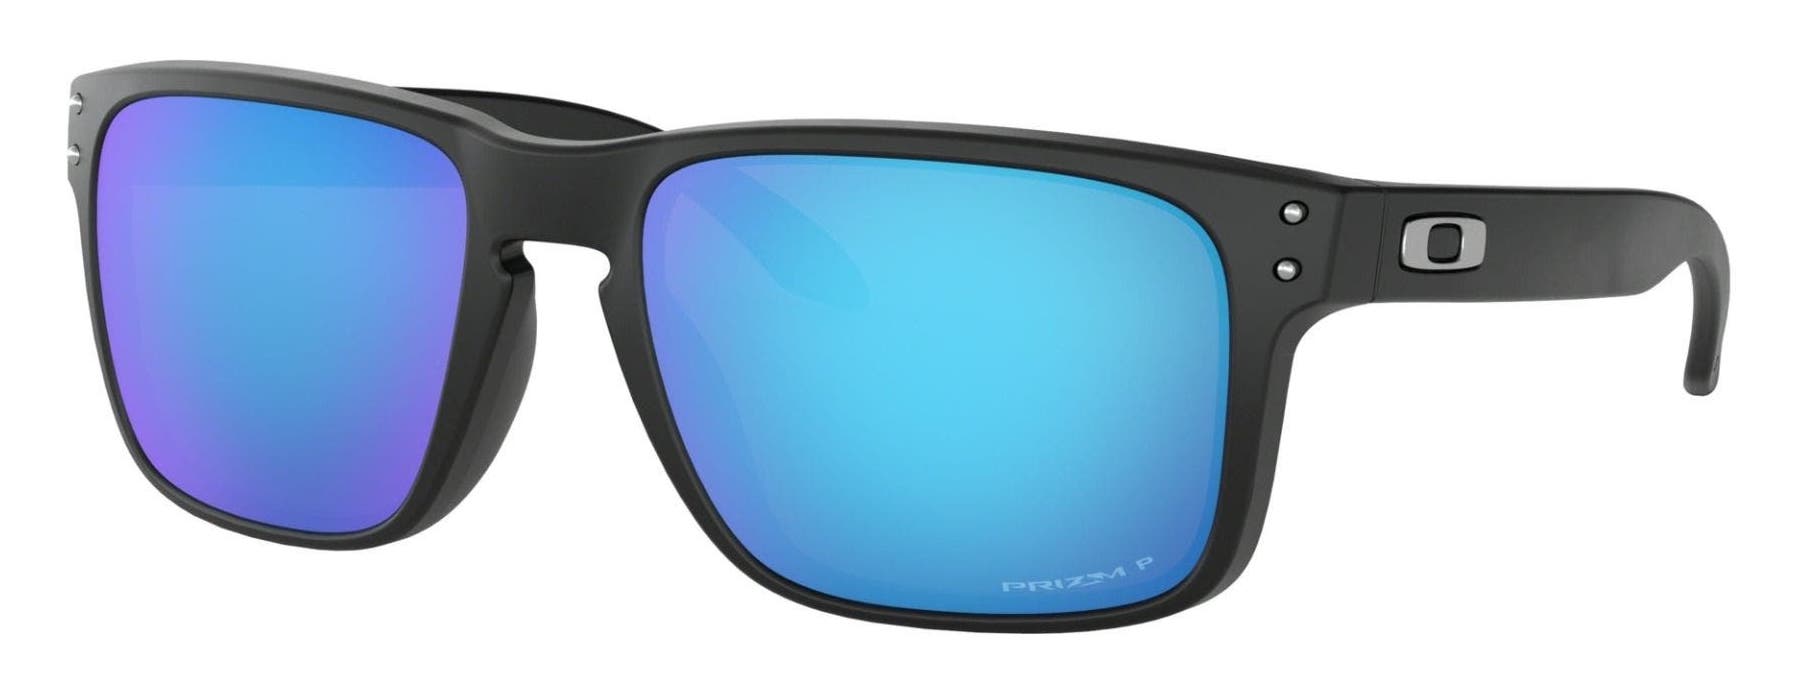 Oakley Holbrook men's lifestyle sunglasses in matte black with PRIZM sapphire blue polarized lenses.